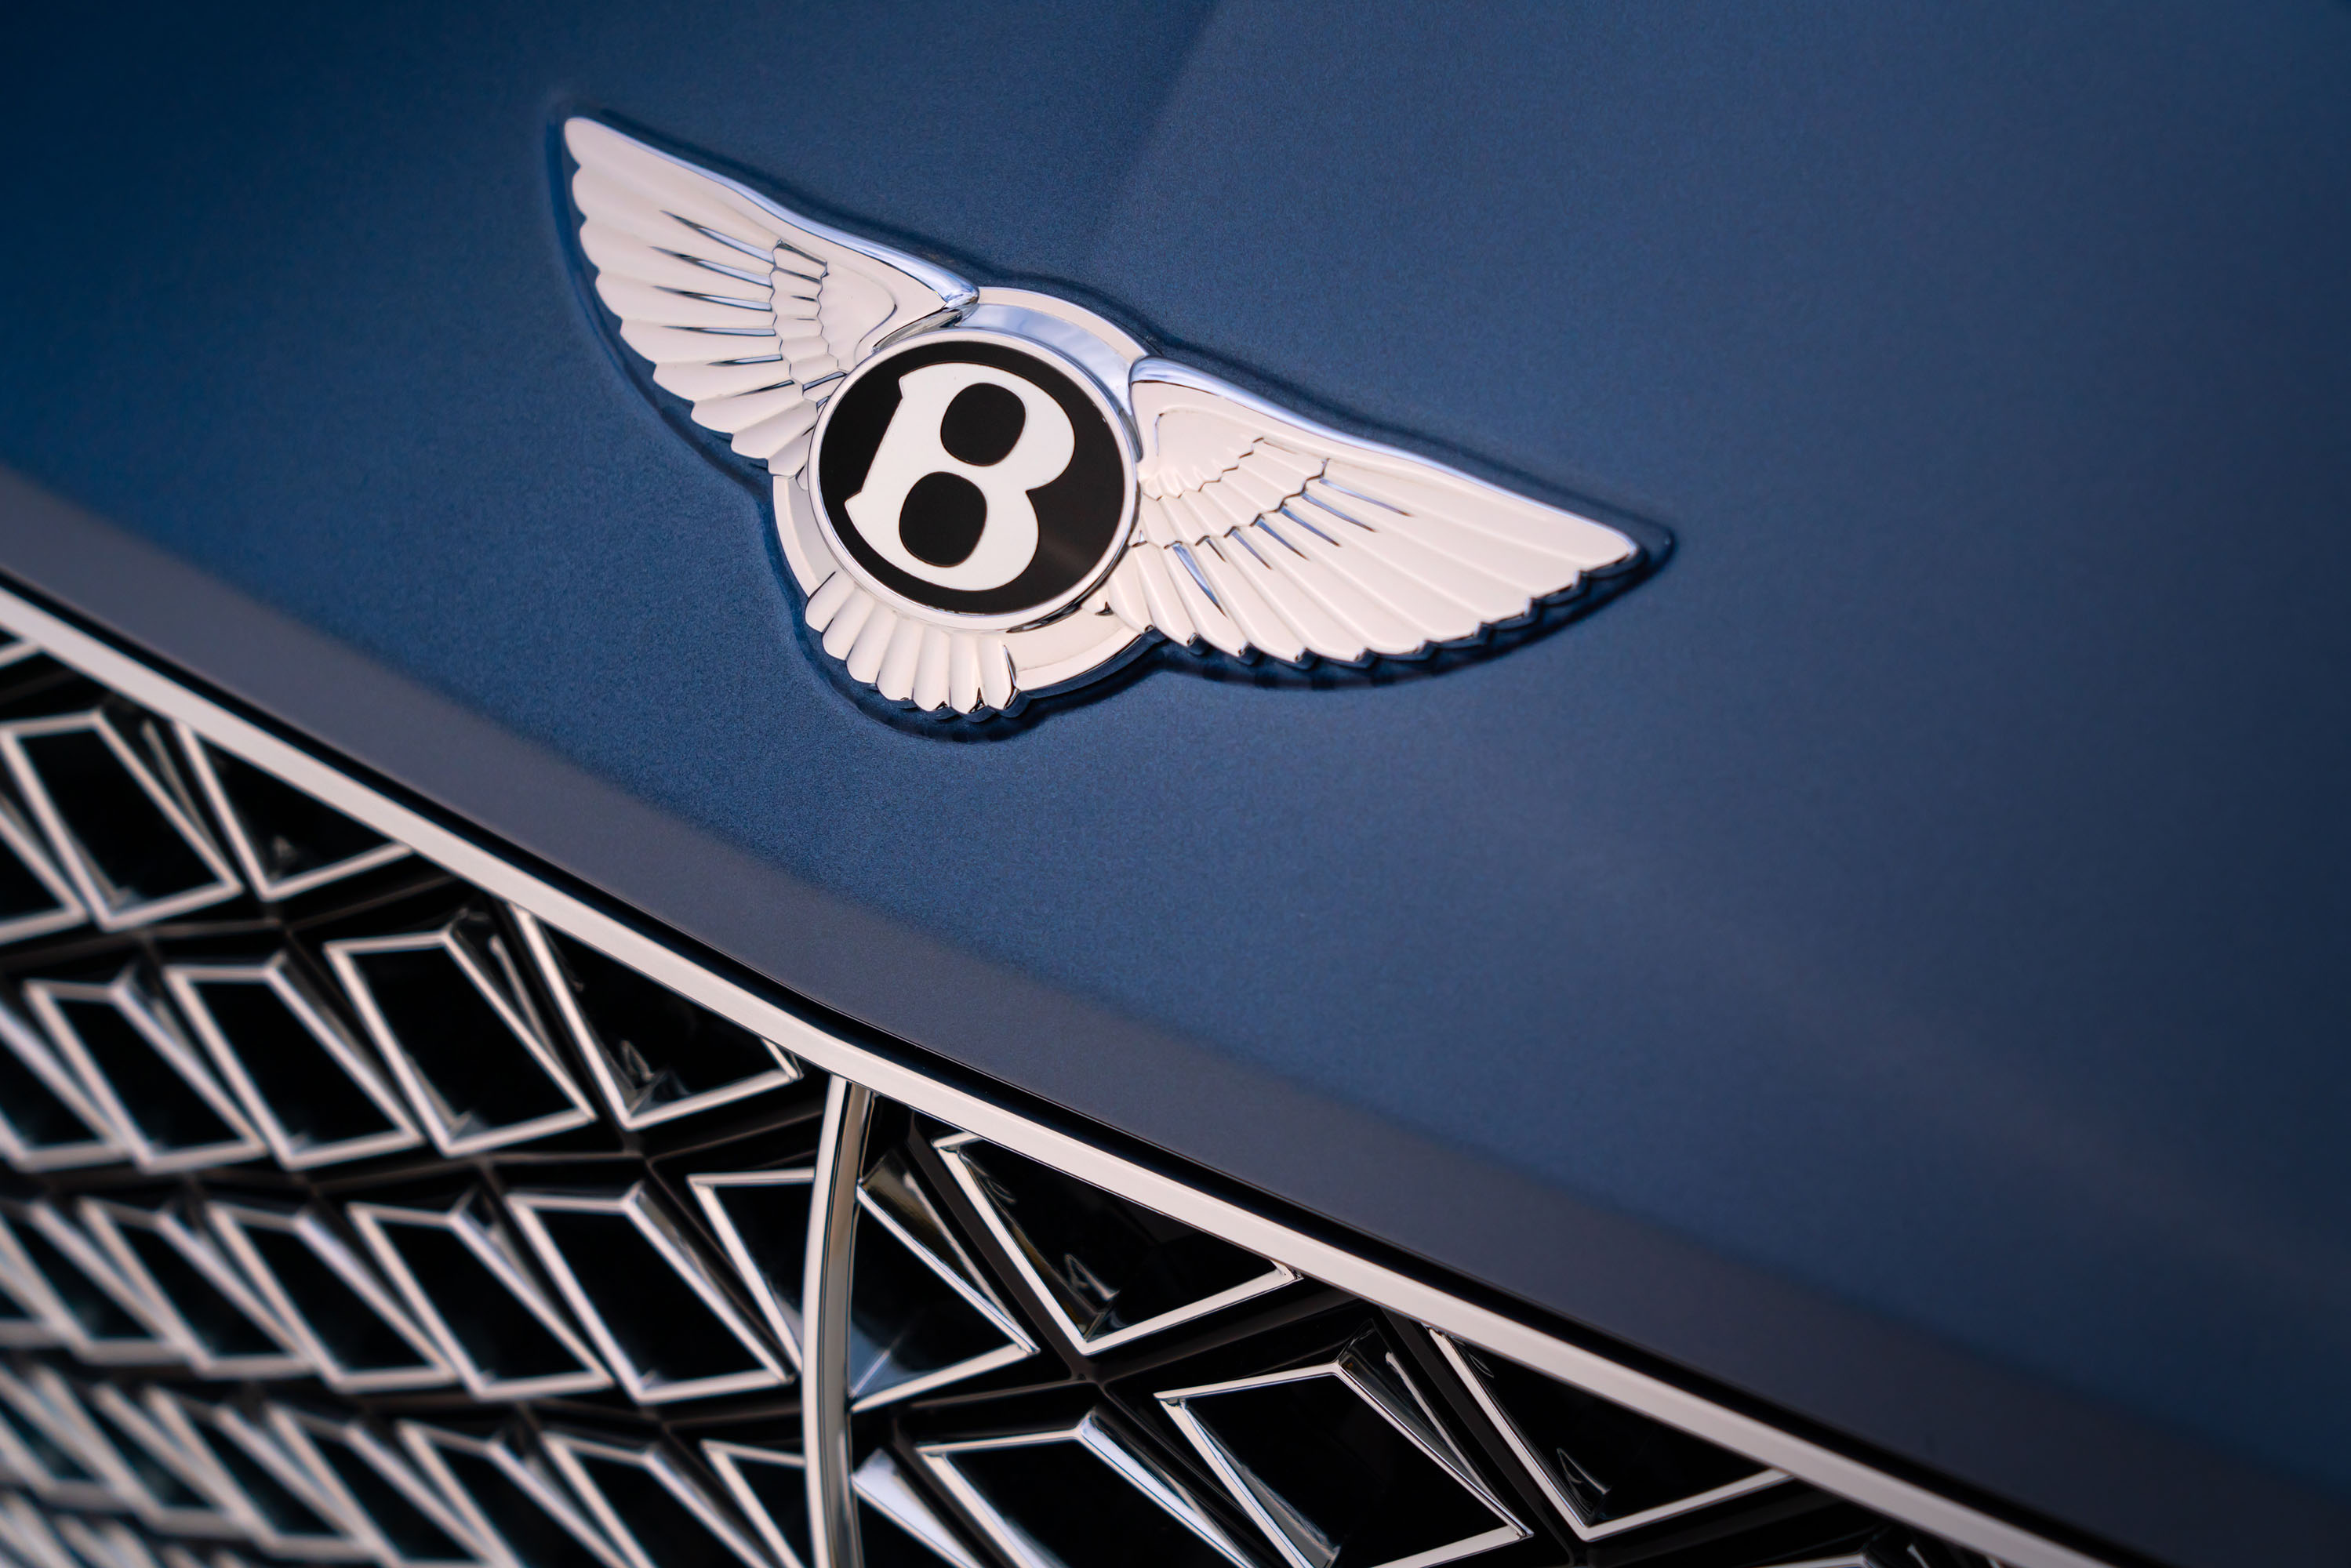 Bentley Continental GT Mulliner Convertible